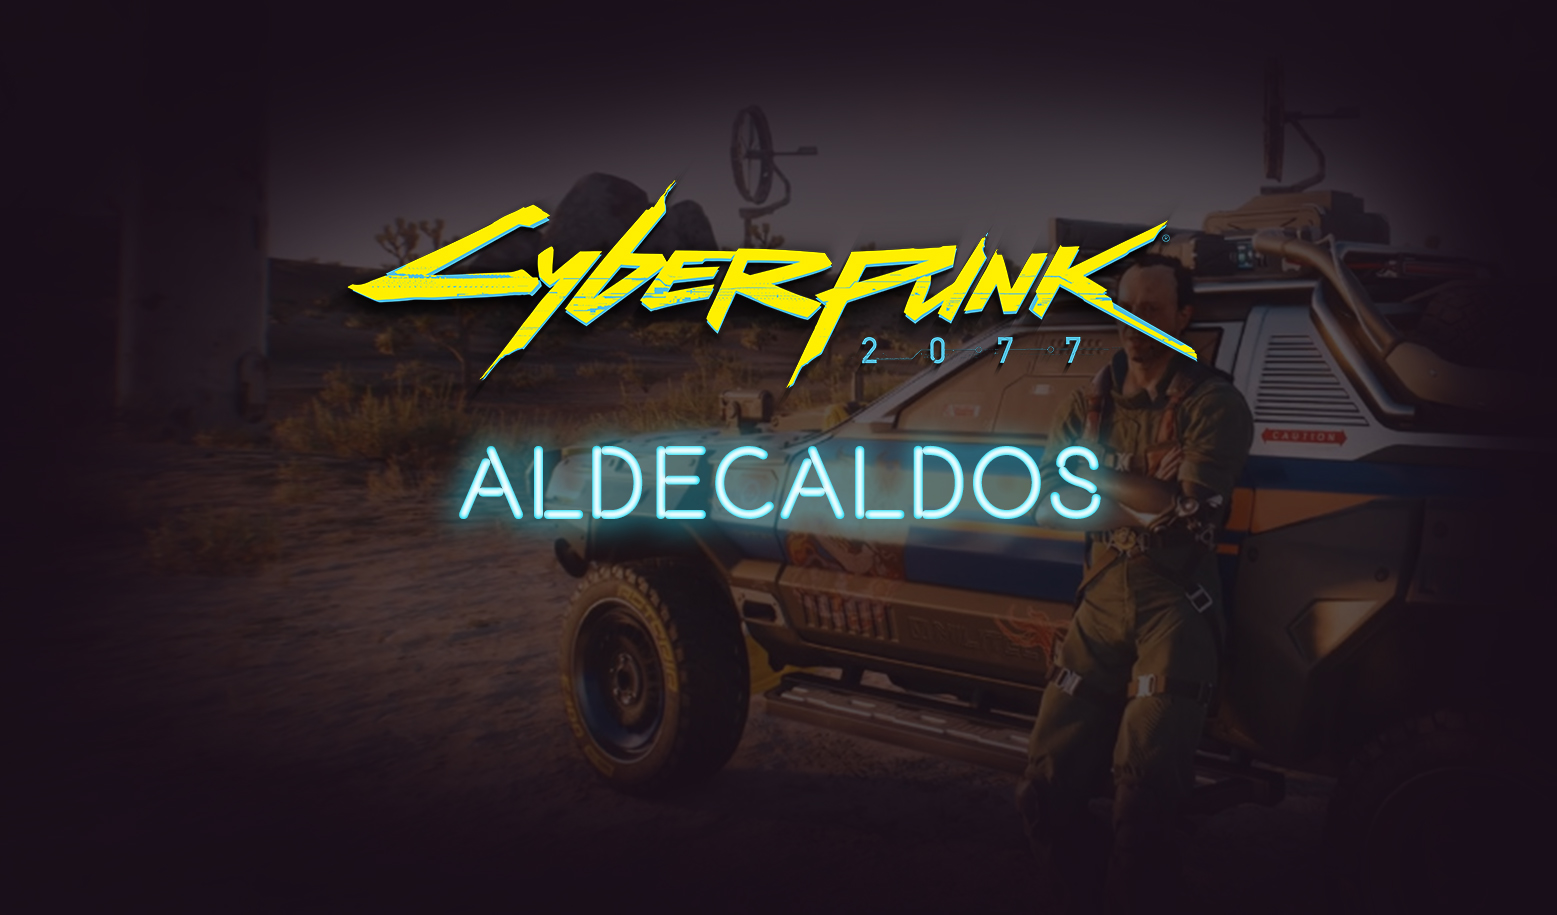 Aldecaldos Cyberpunk 2077 Wallpapers